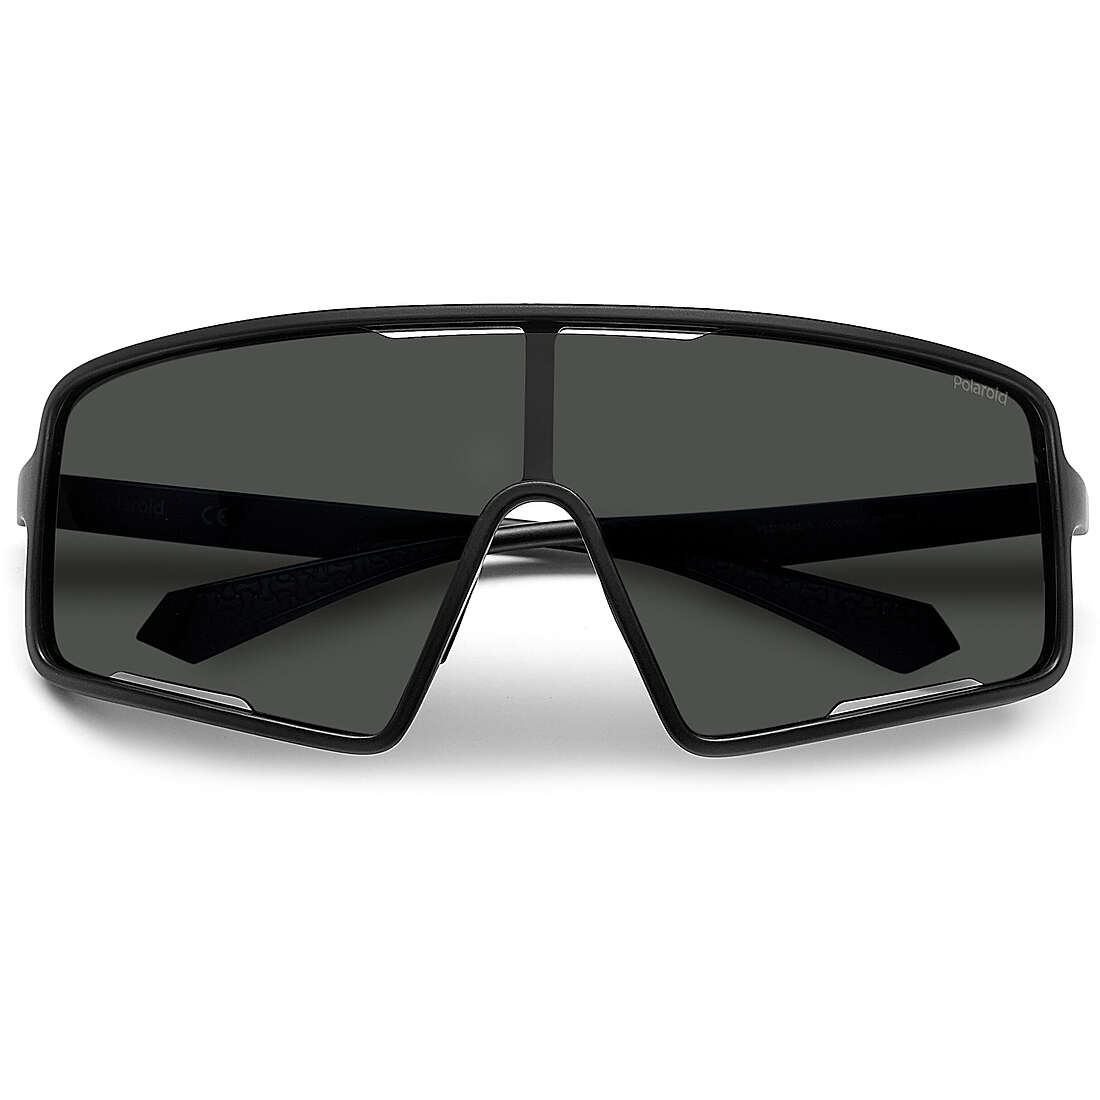 occhiali da sole Polaroid neri forma Mascherina 20534300399M9